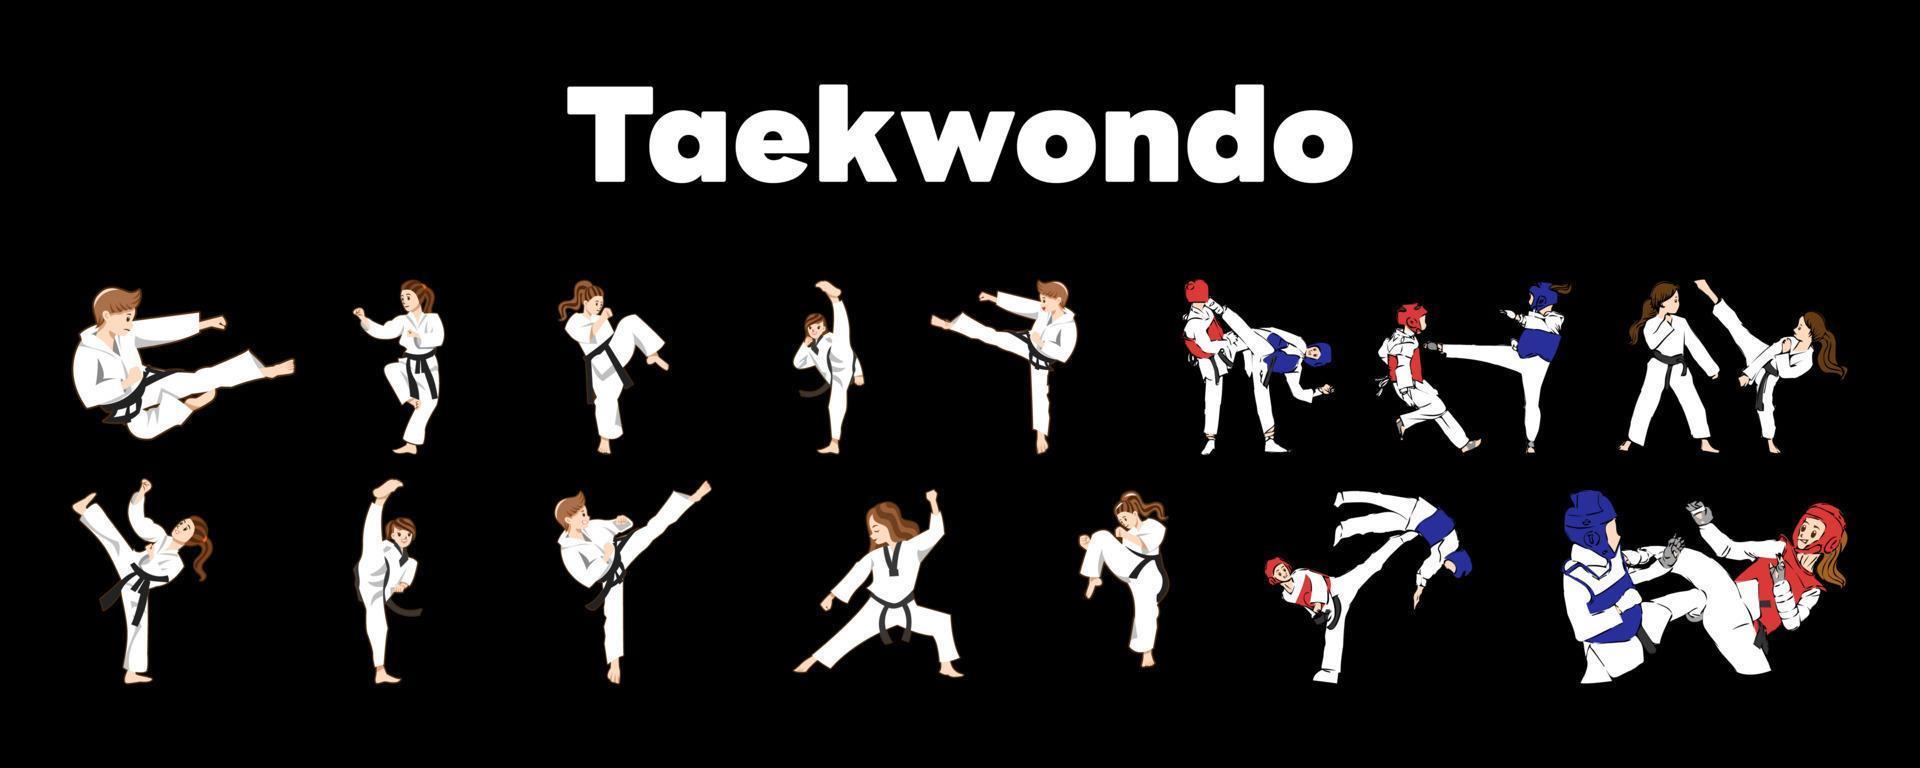 taekwondo speler vector reeks verzameling grafisch clip art ontwerp